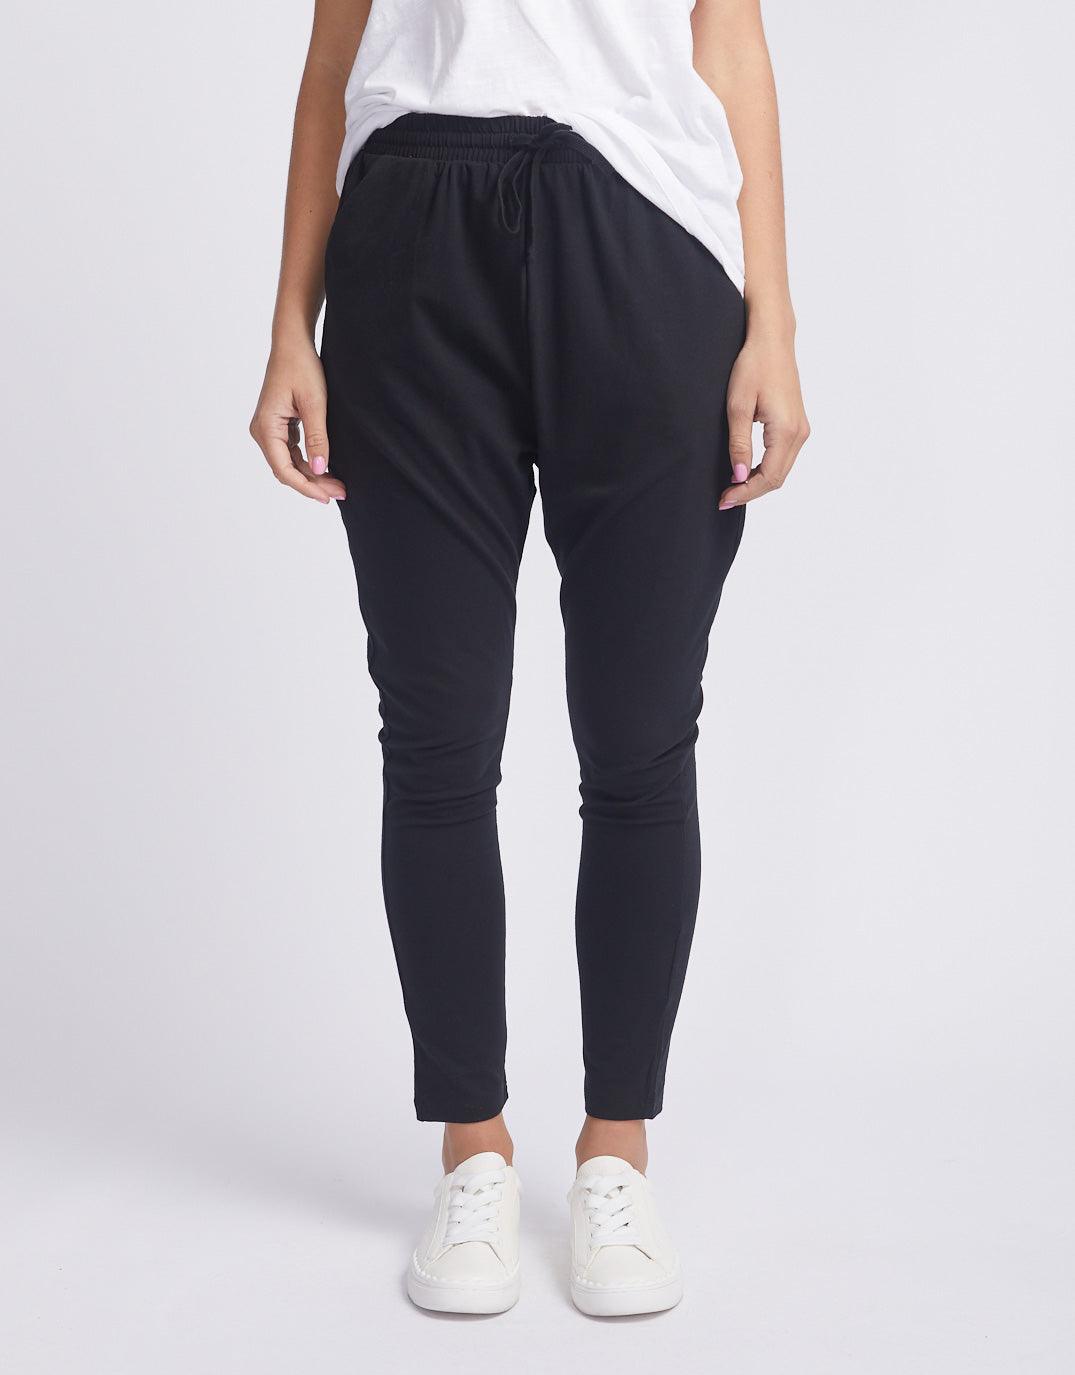 Buy Jade Lounge Pants - Black Betty Basics for Sale Online Australia